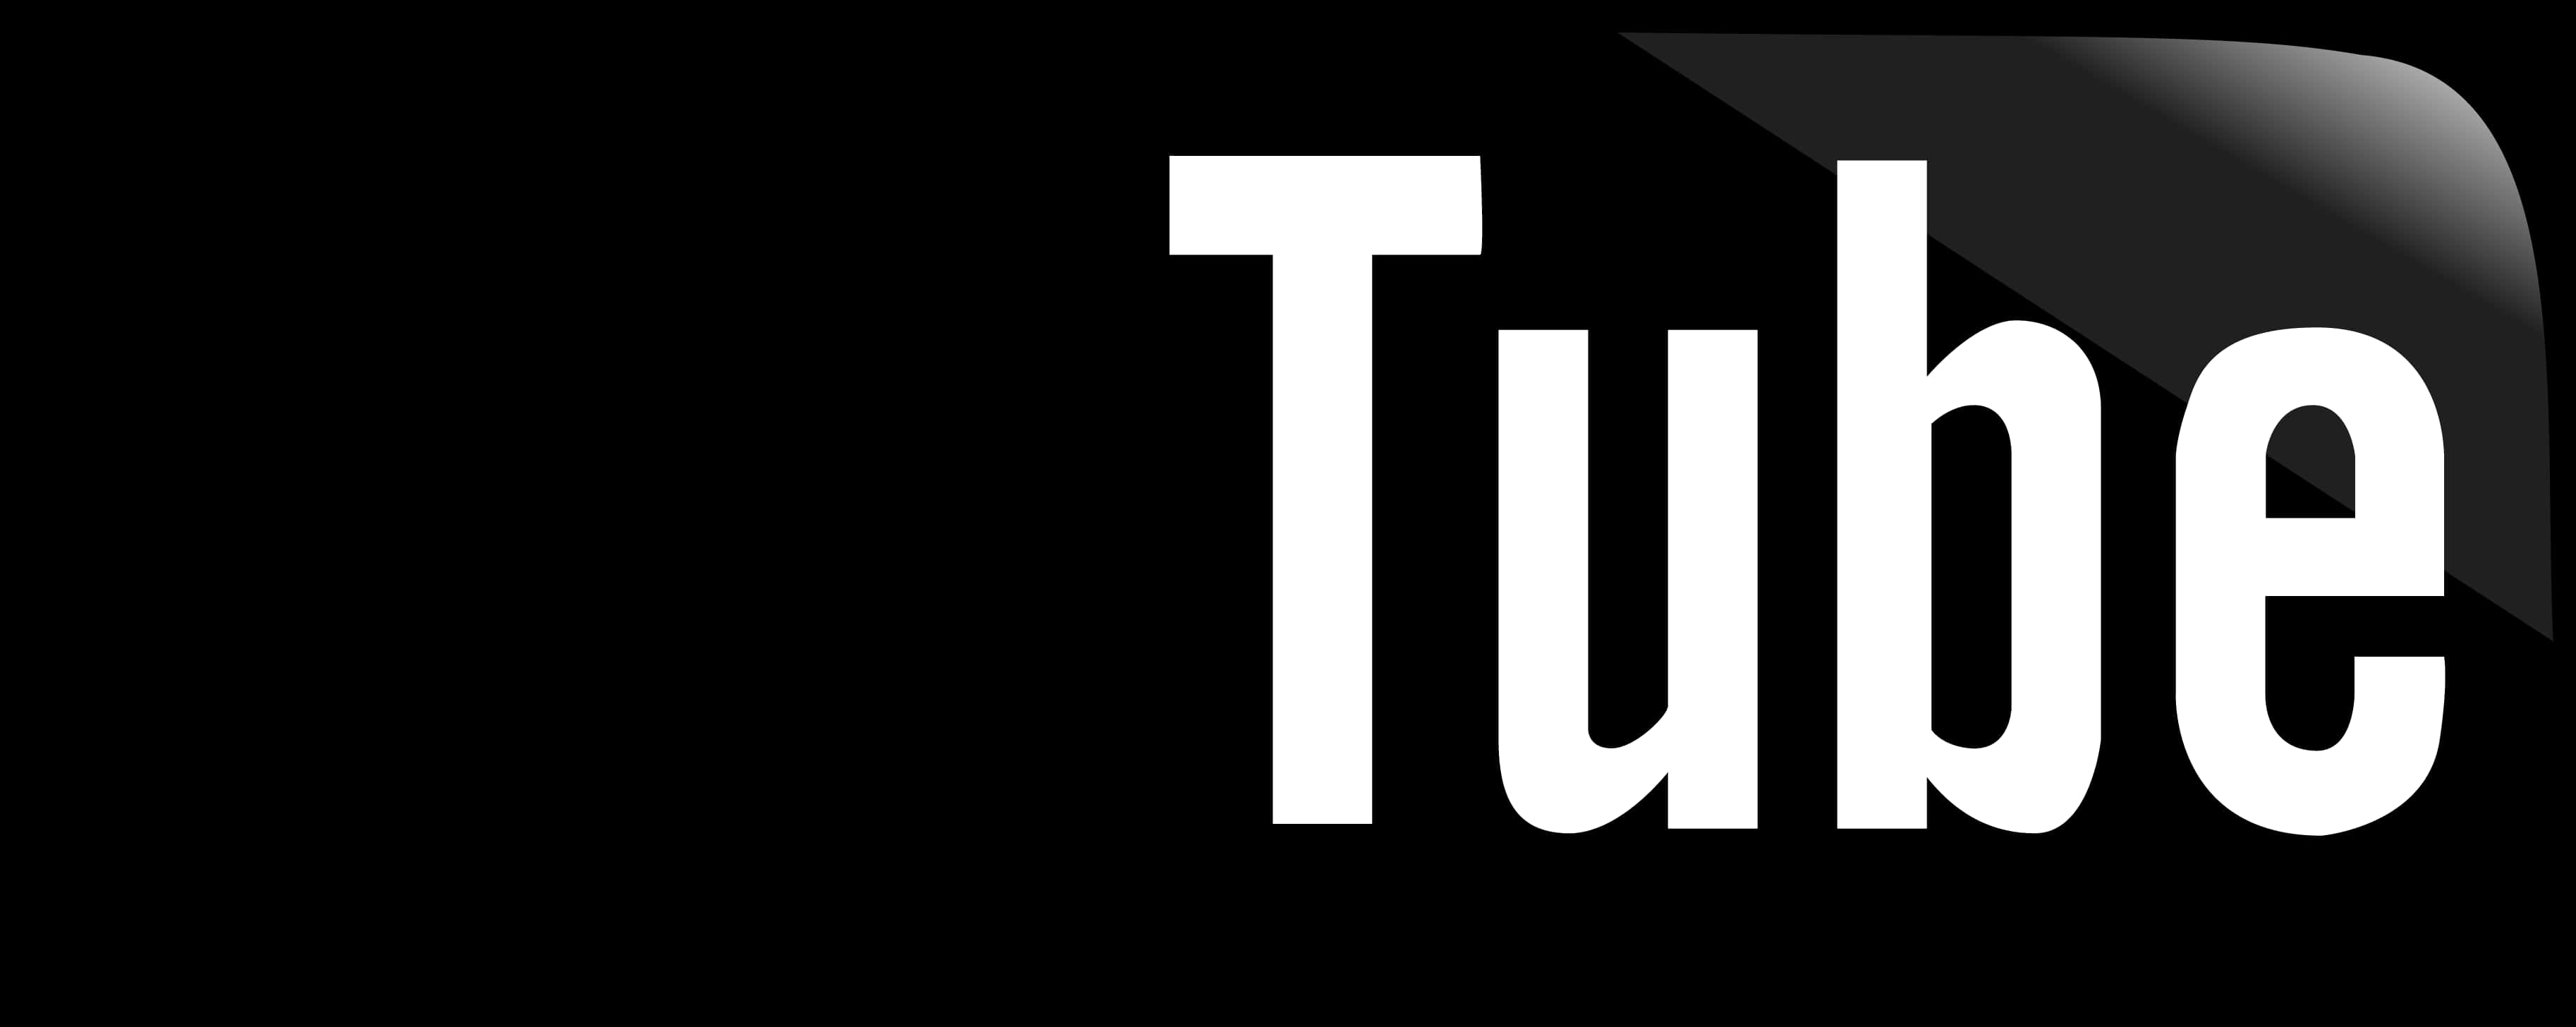 Black You Tube Logo PNG image